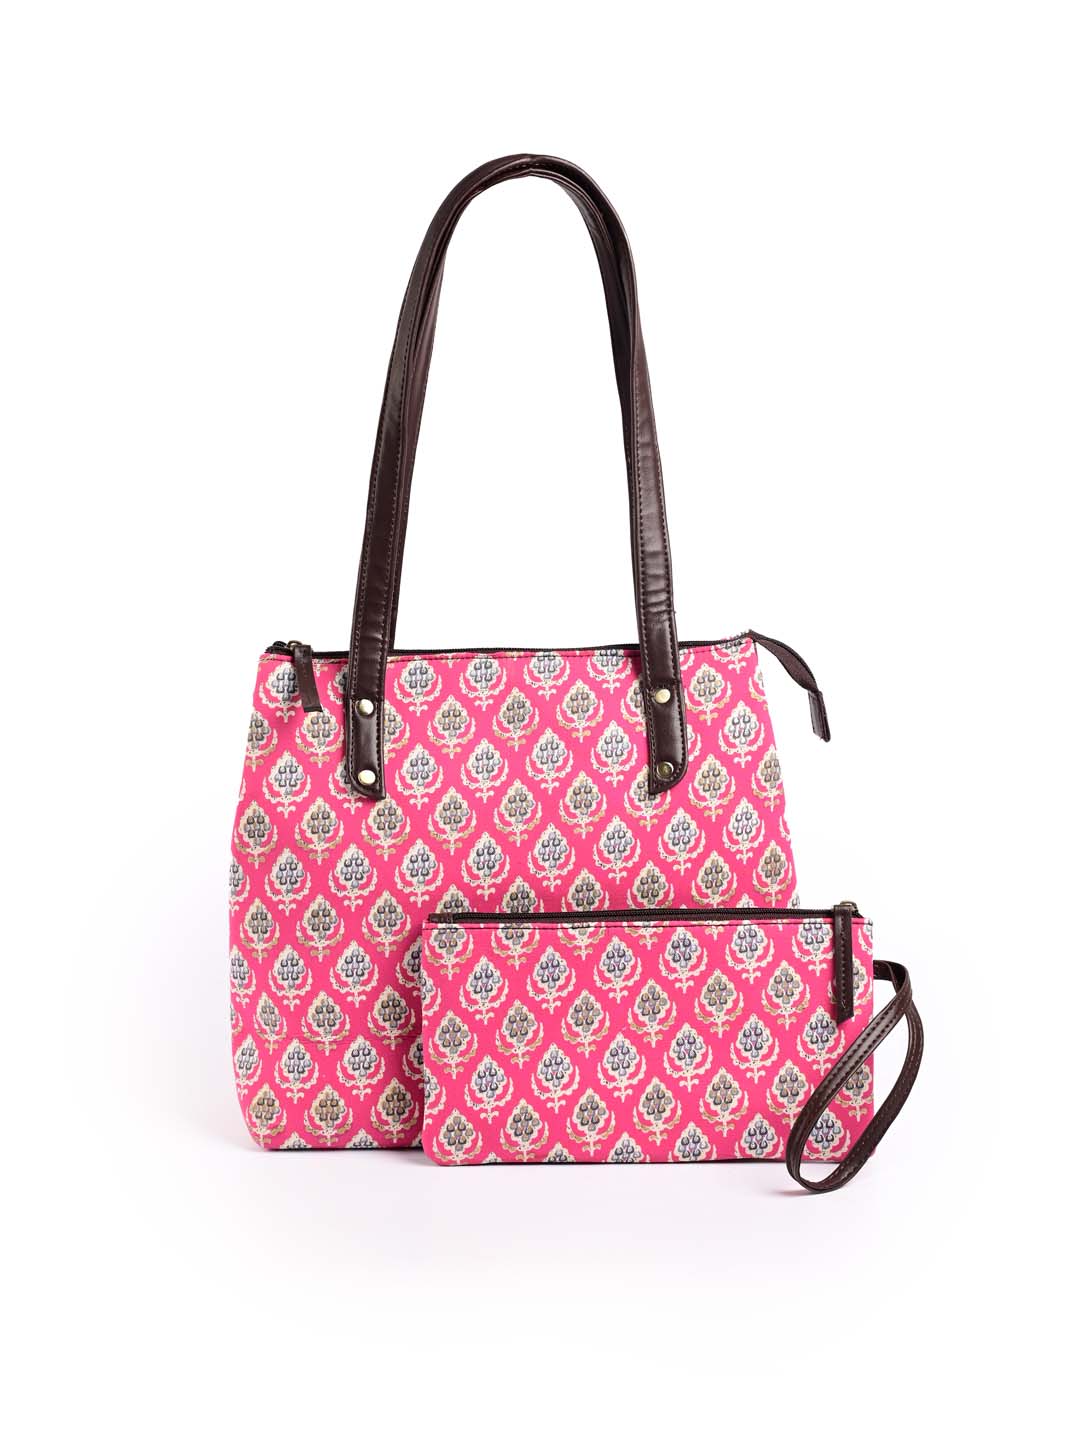 Pink Printed Cotton Handbag With Clutch